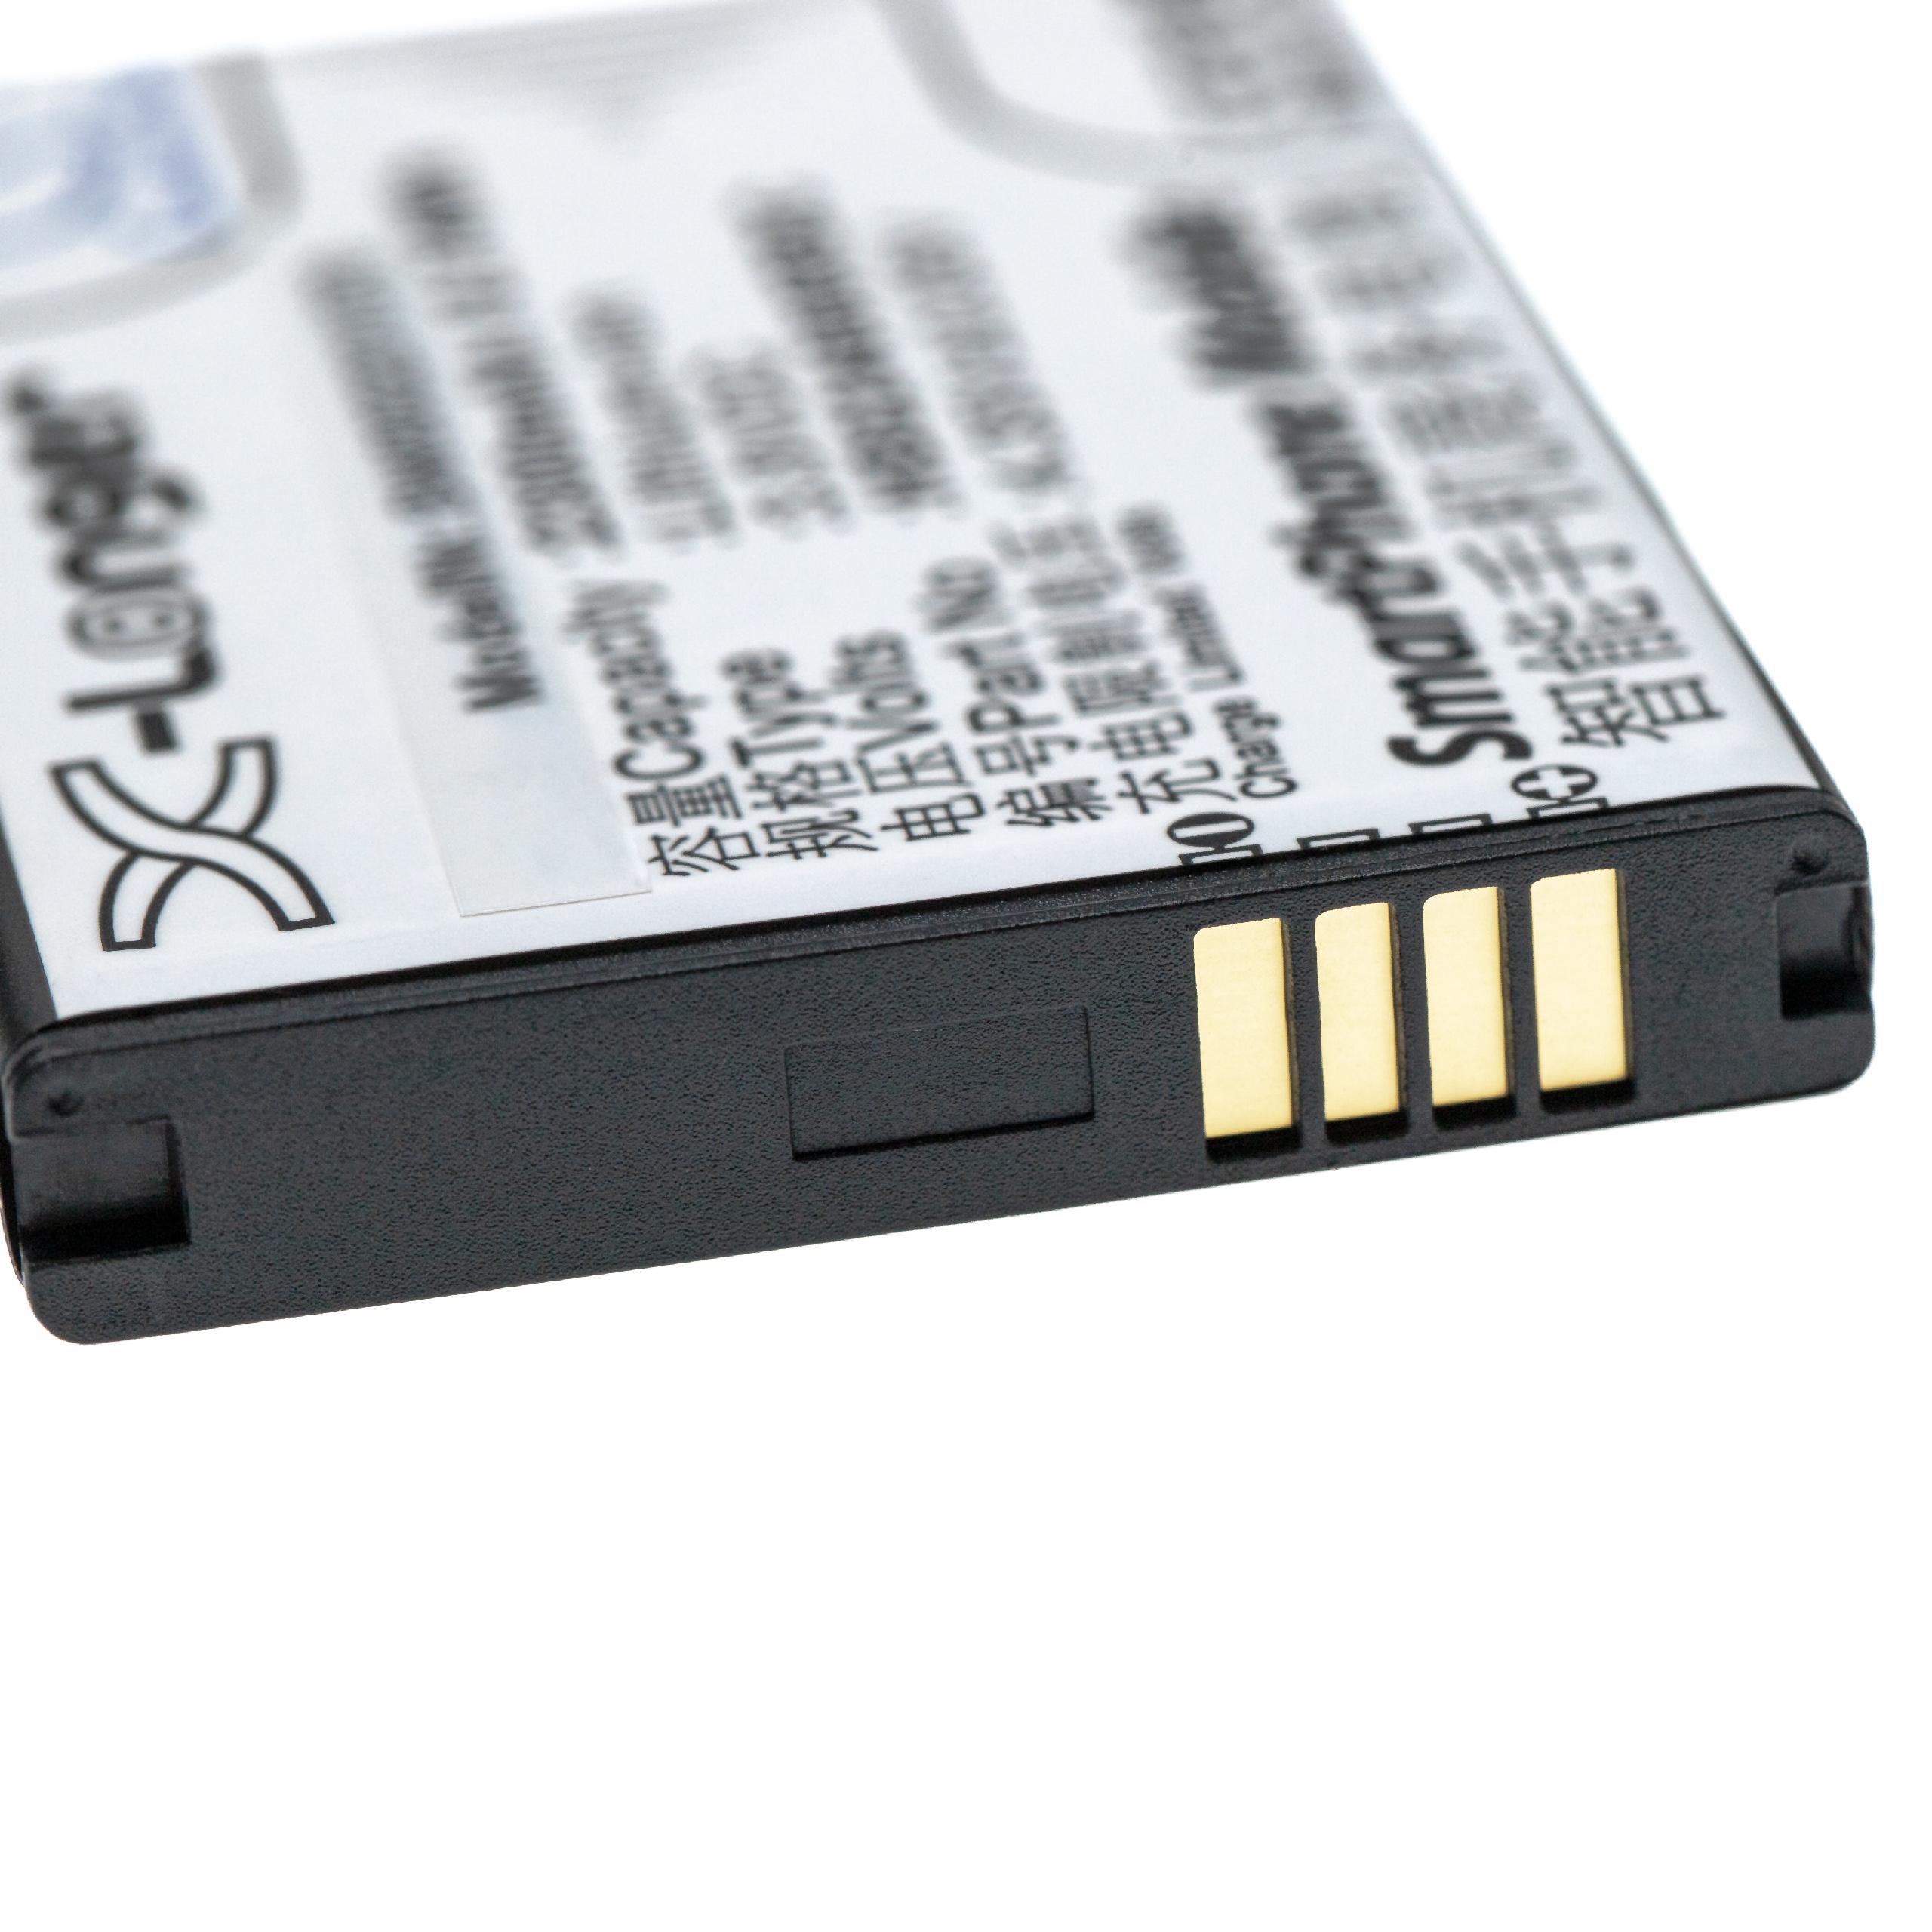 Batteria per hotspot modem router portatile sostituisce Huawei HB824666RBC Huawei - 2300mAh 3,8V Li-Ion